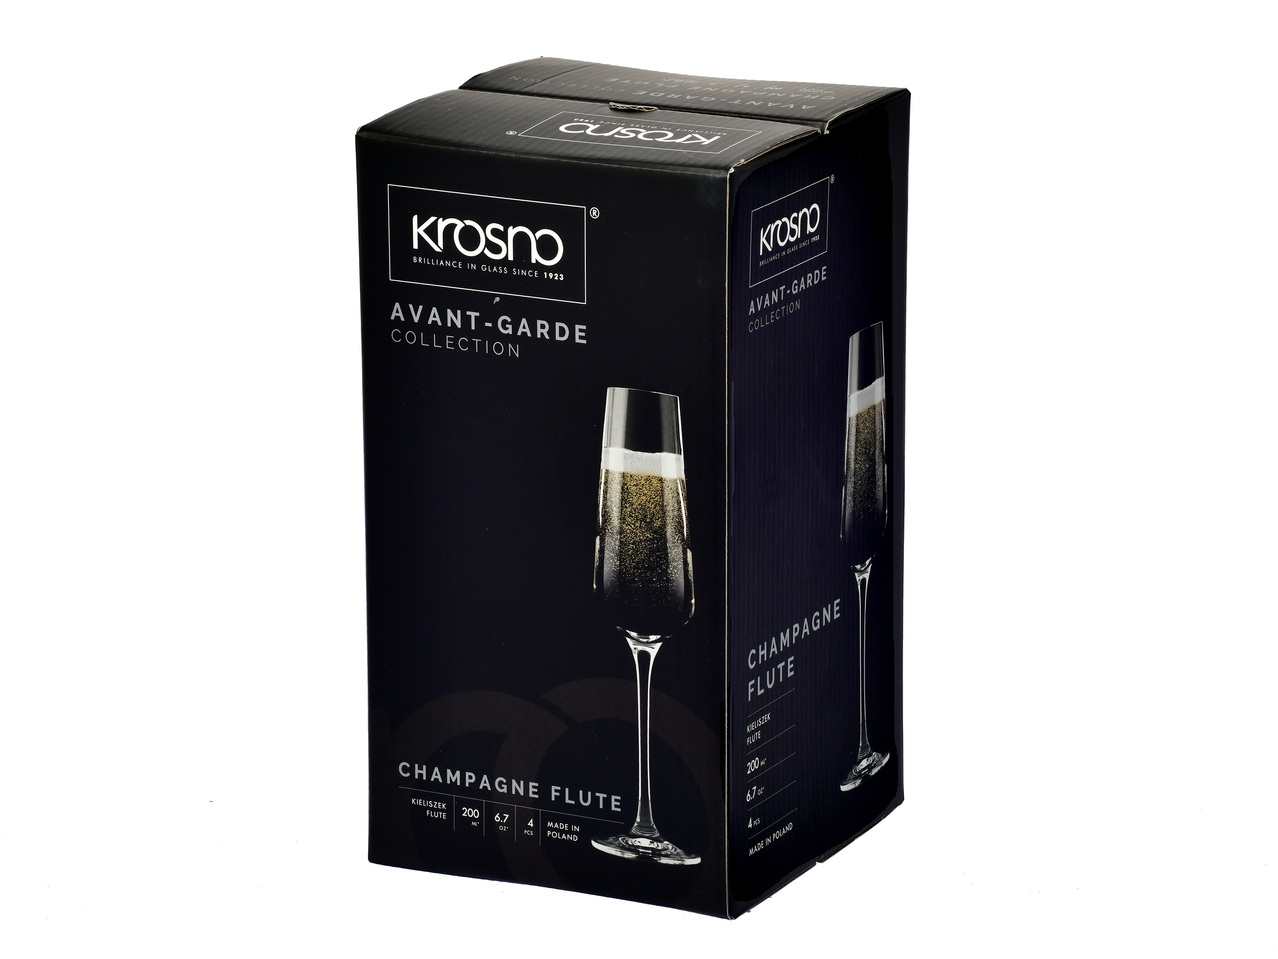 KROSNO® Kieliszki do szampana AVANT-GARDE, 4 , cena 49,99 PLN 
KROSNO® Kieliszki ...